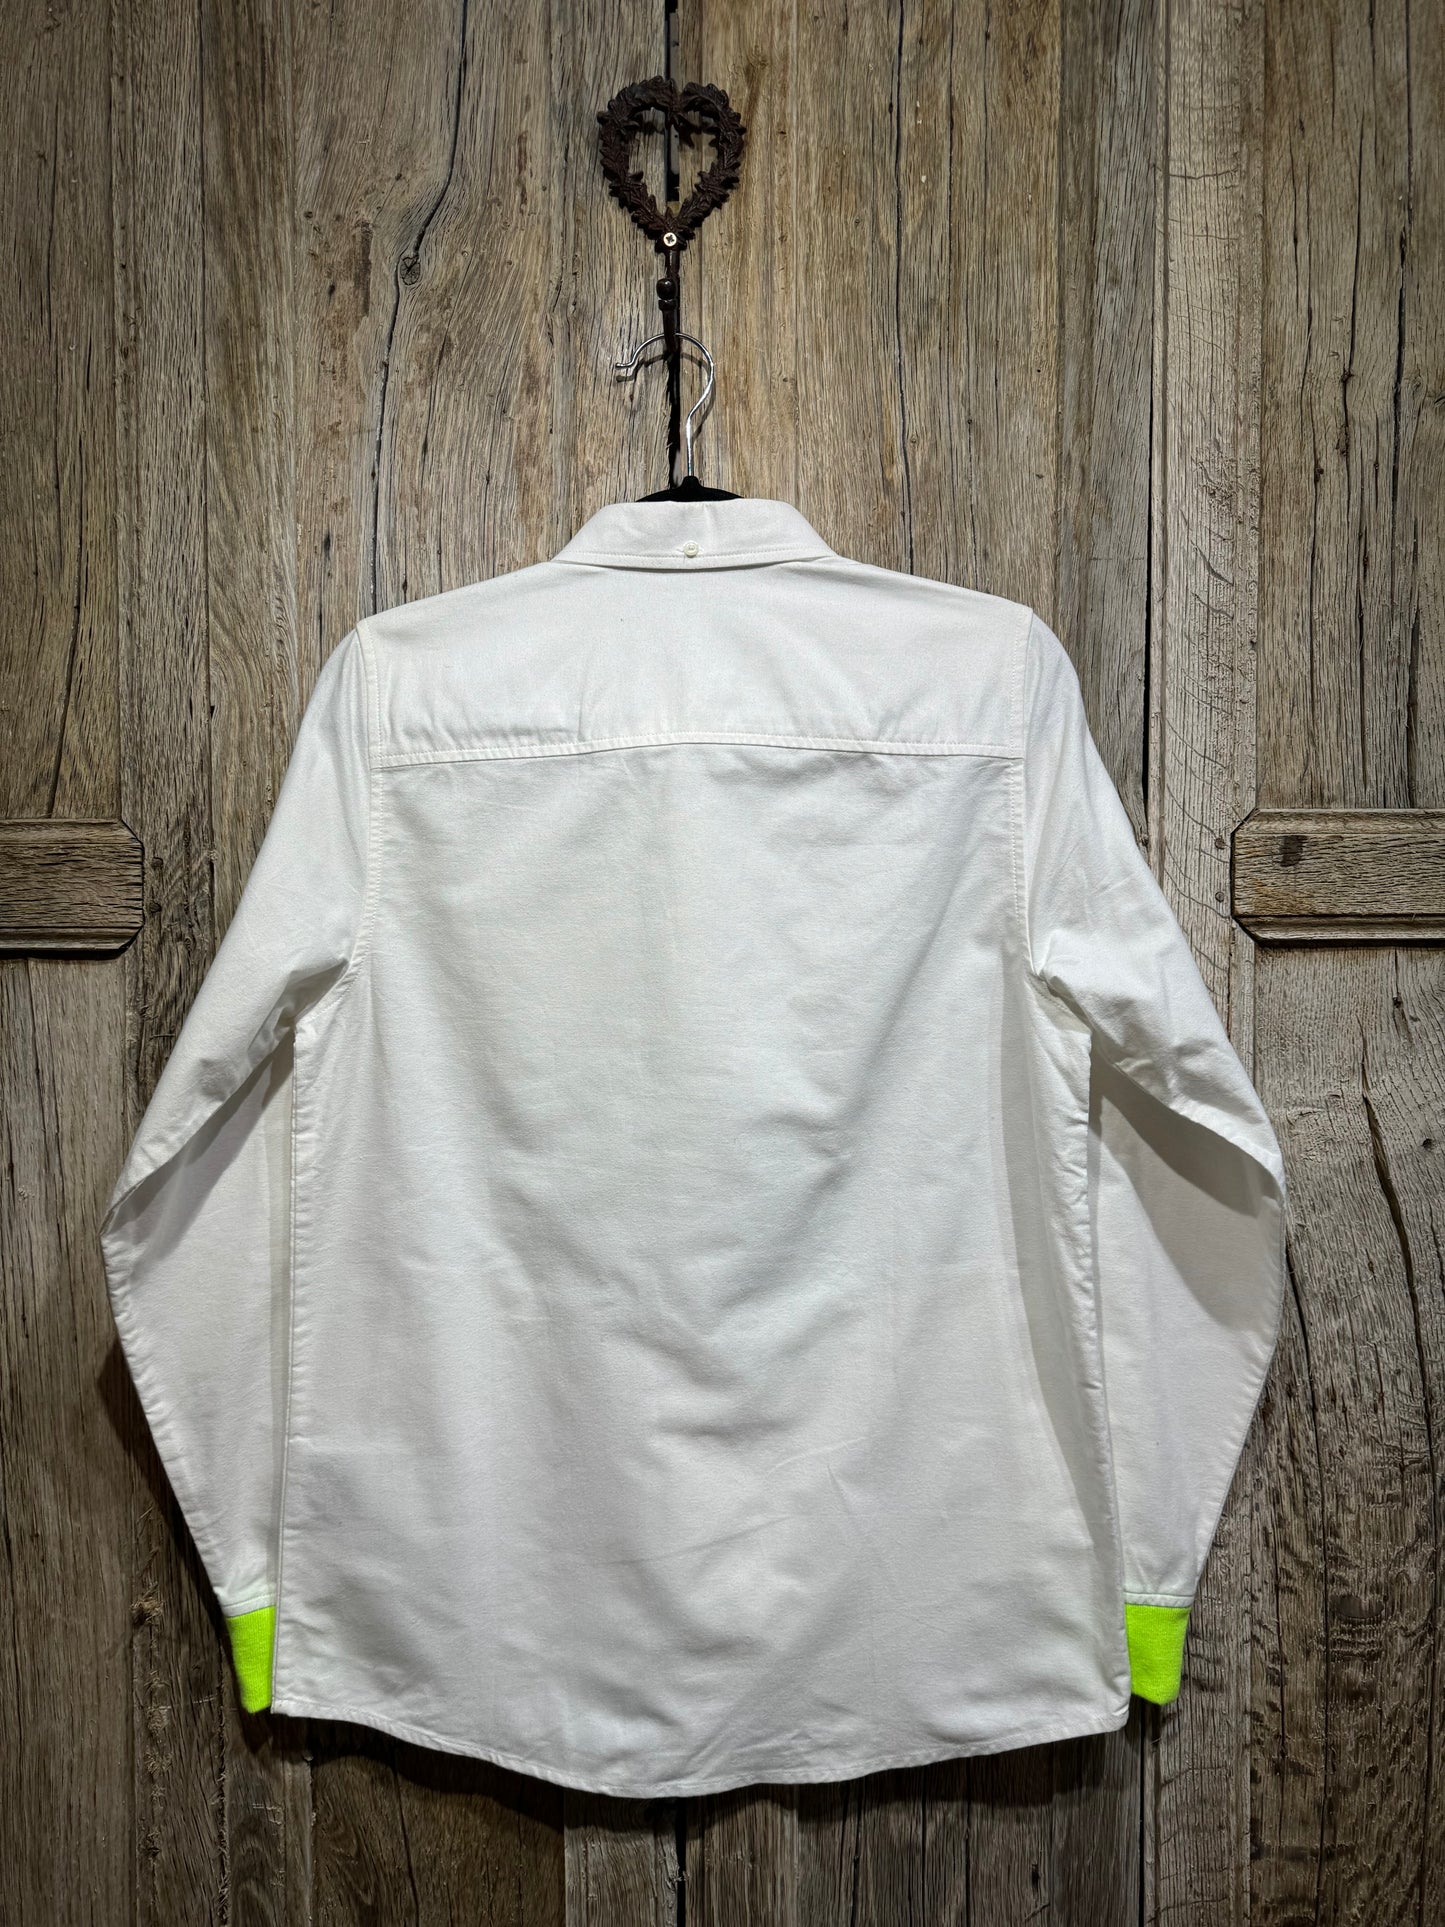 Carhartt White Button Shirt